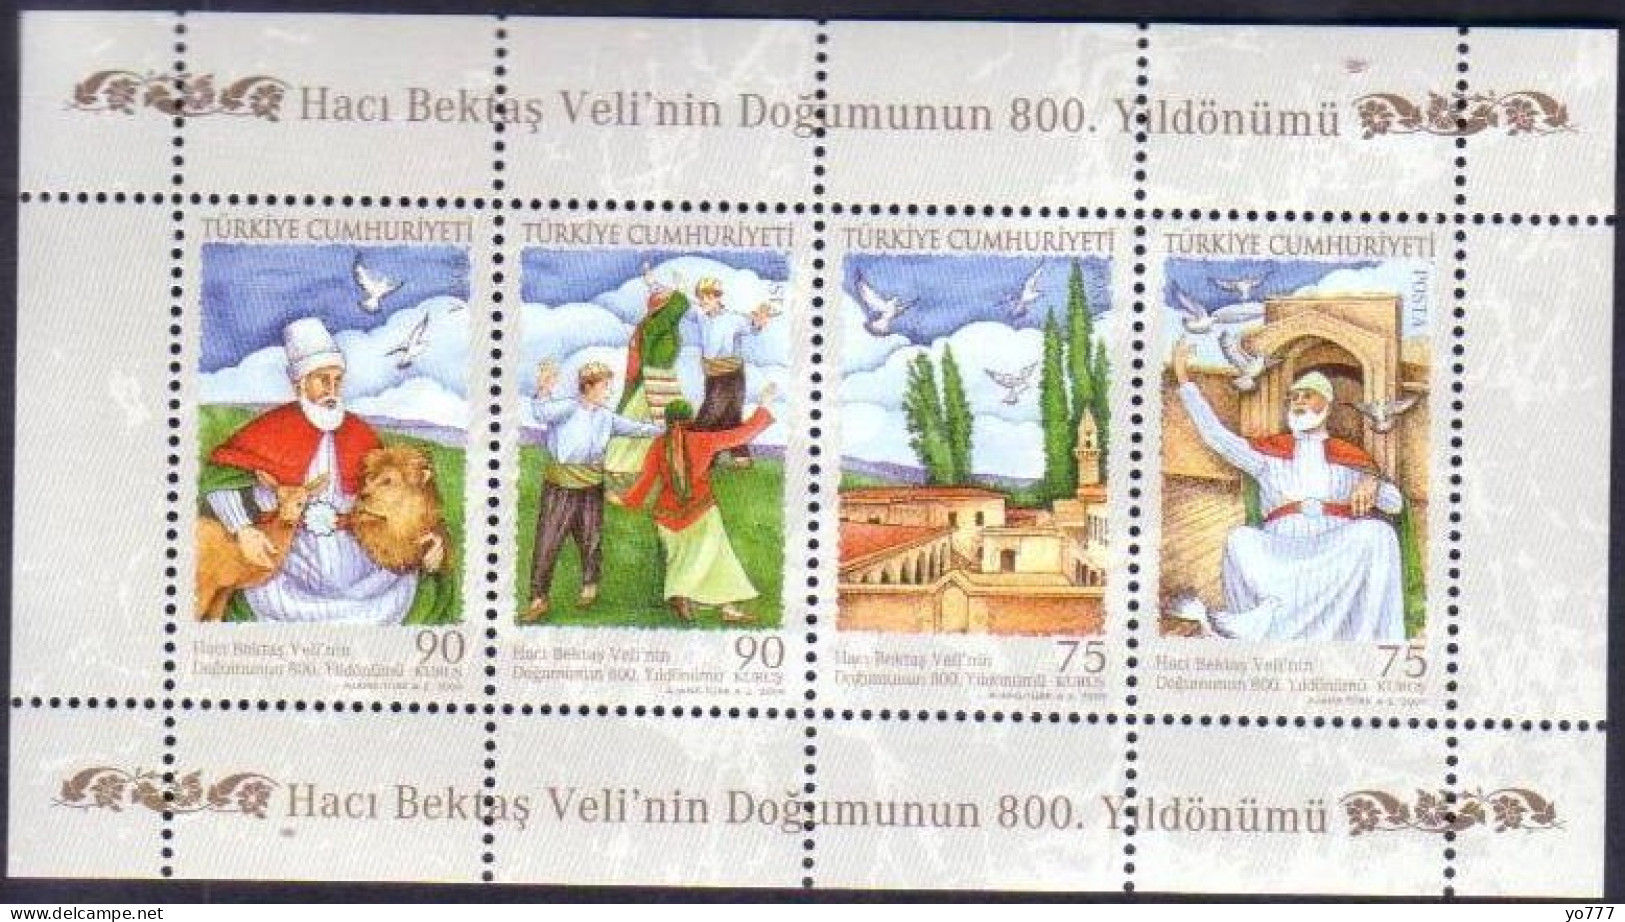 (3773-76) TURKEY 800th ANNIVERSARY OF THE BIRTH OF HACI BEKTAS VELI SOUVENIR SHEET MNH** - Neufs